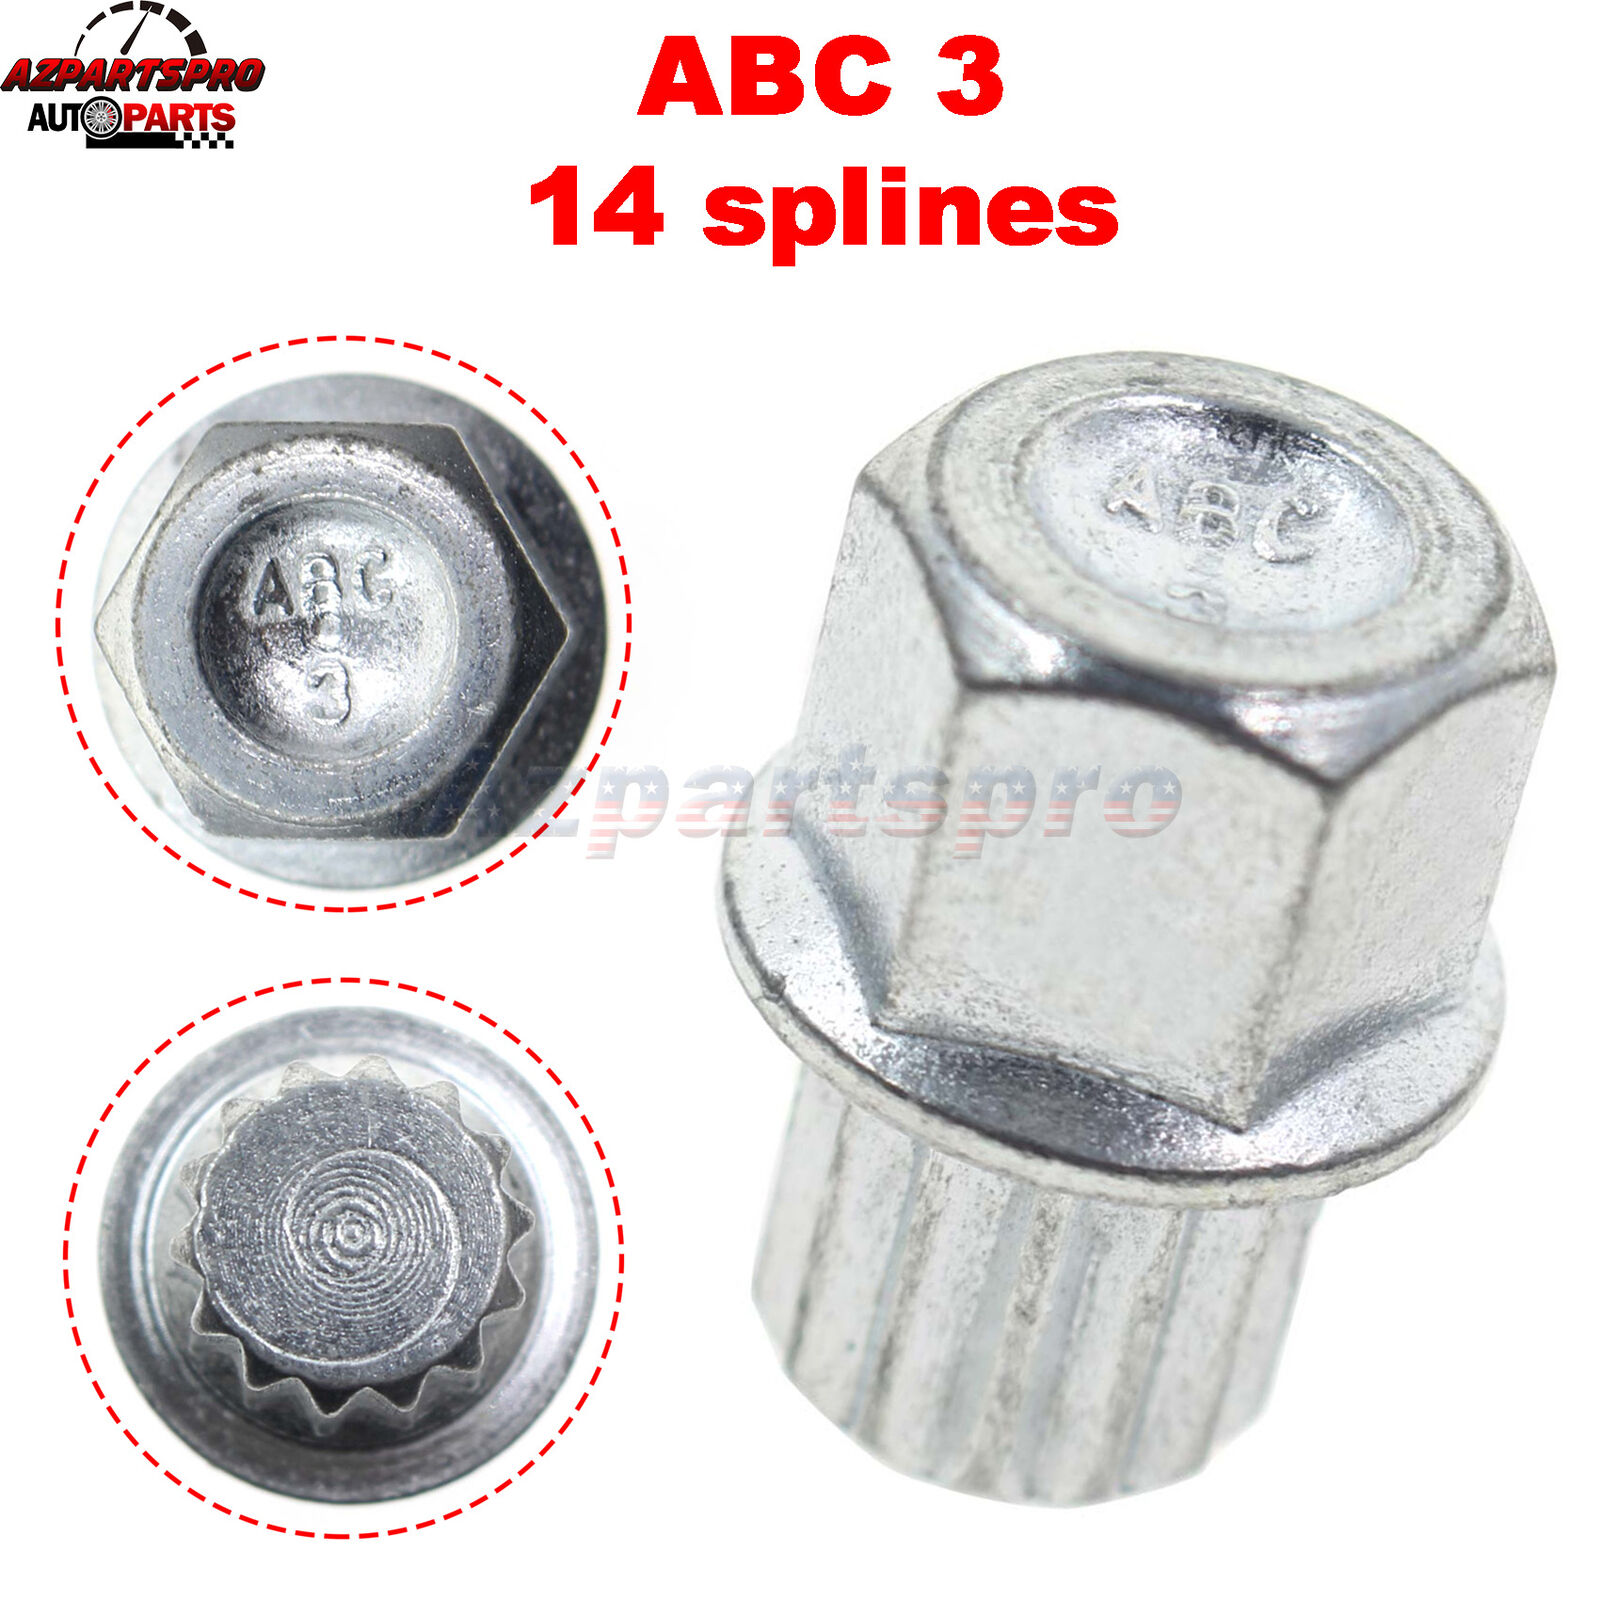 For VW Volkswagen Audi Wheel Lock Key 14 Pointed Spline Style ABC 3 US FAST SHIP